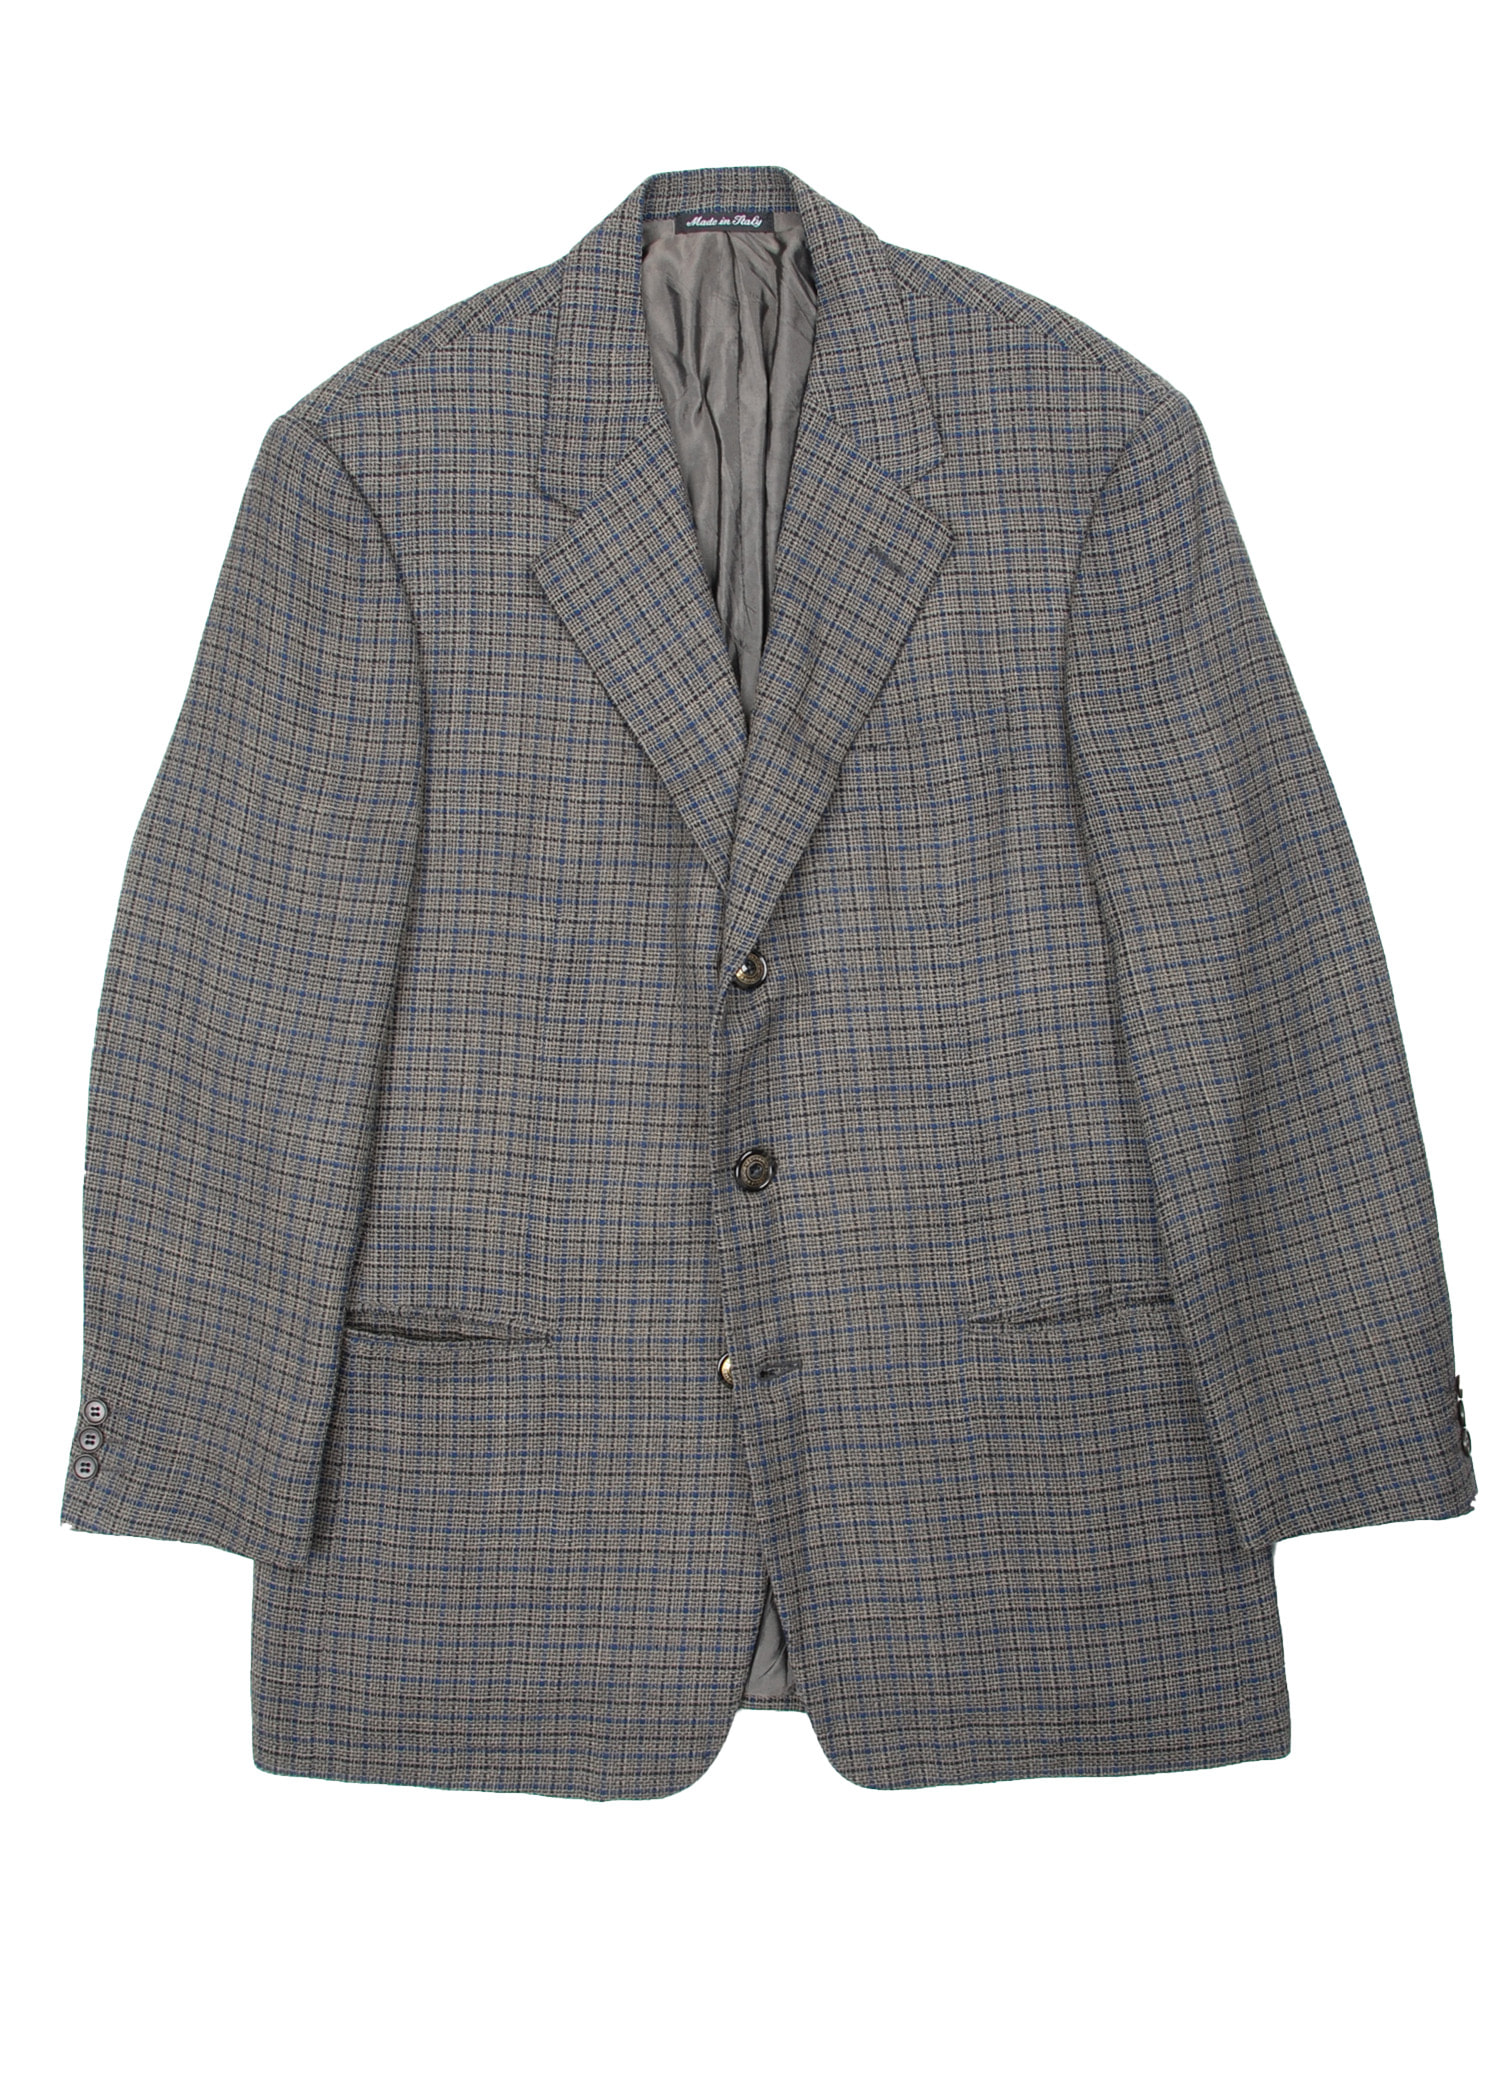 MODA CORRENTE  jacket ( fabric by Loropiana )